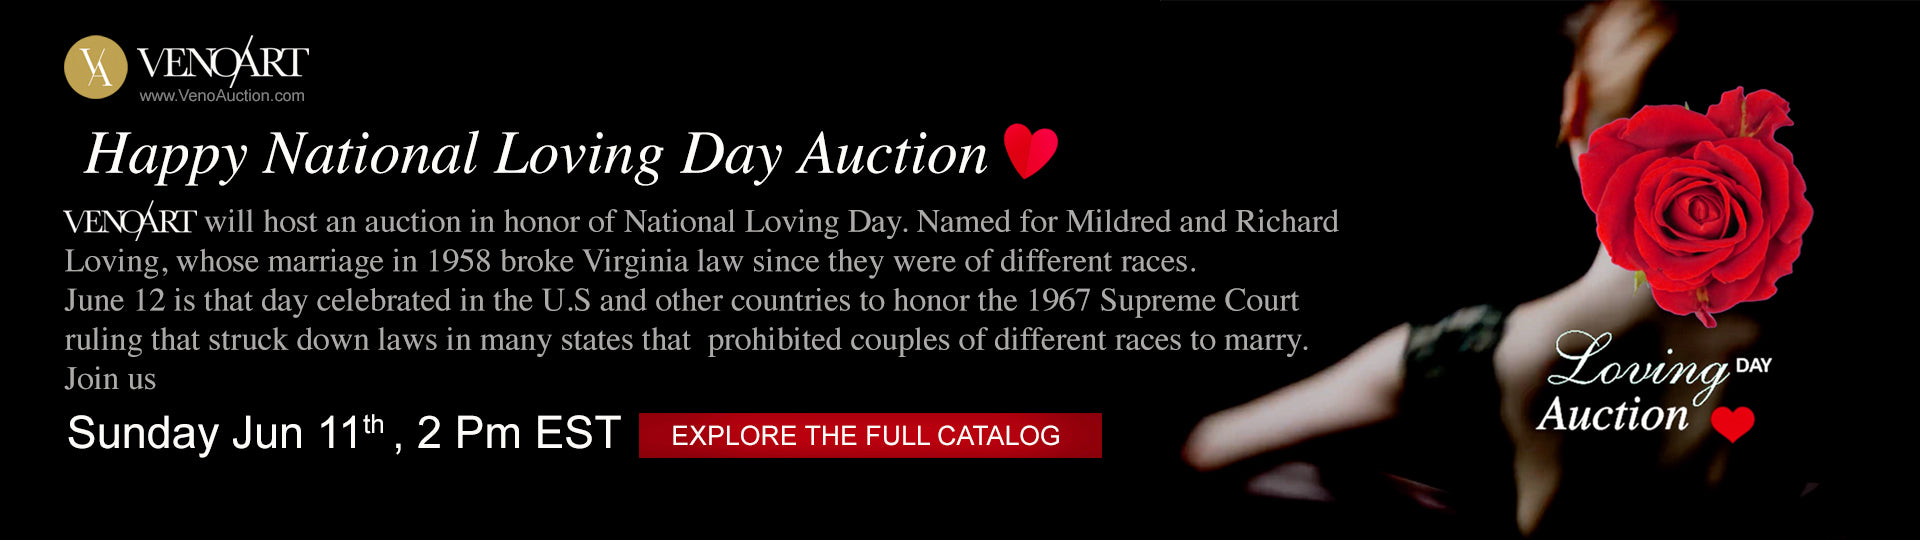 The VenoArt National Loving Day Auction